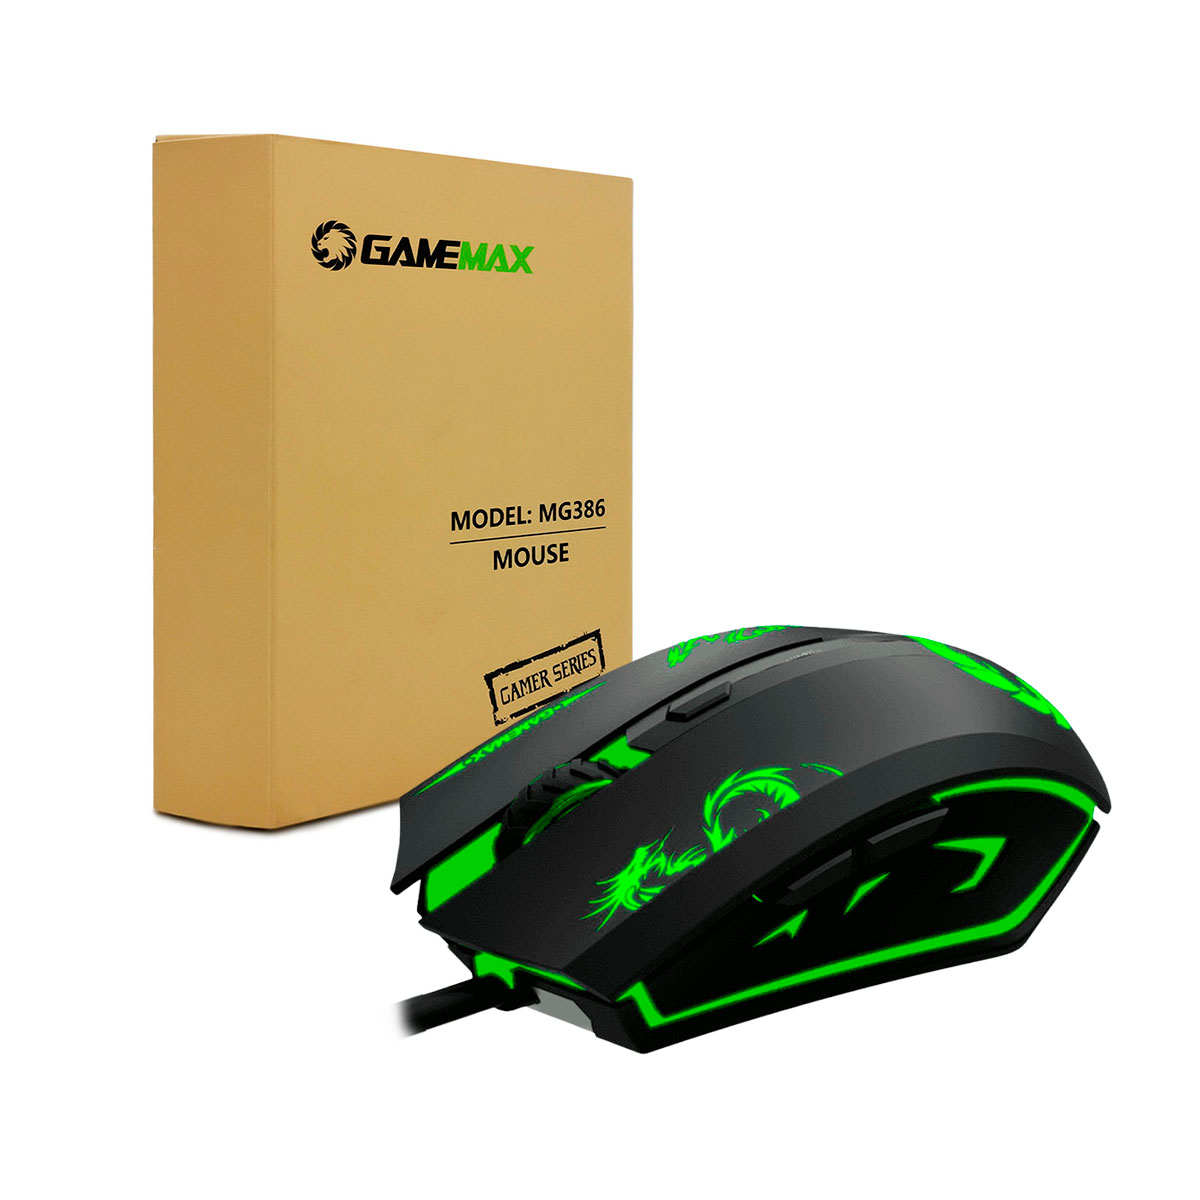 Mouse Gamer Gamemax MG386, USB 2.0, 3200 DPI, 4 Cores Led, Acabamento Emborrachado - Preto